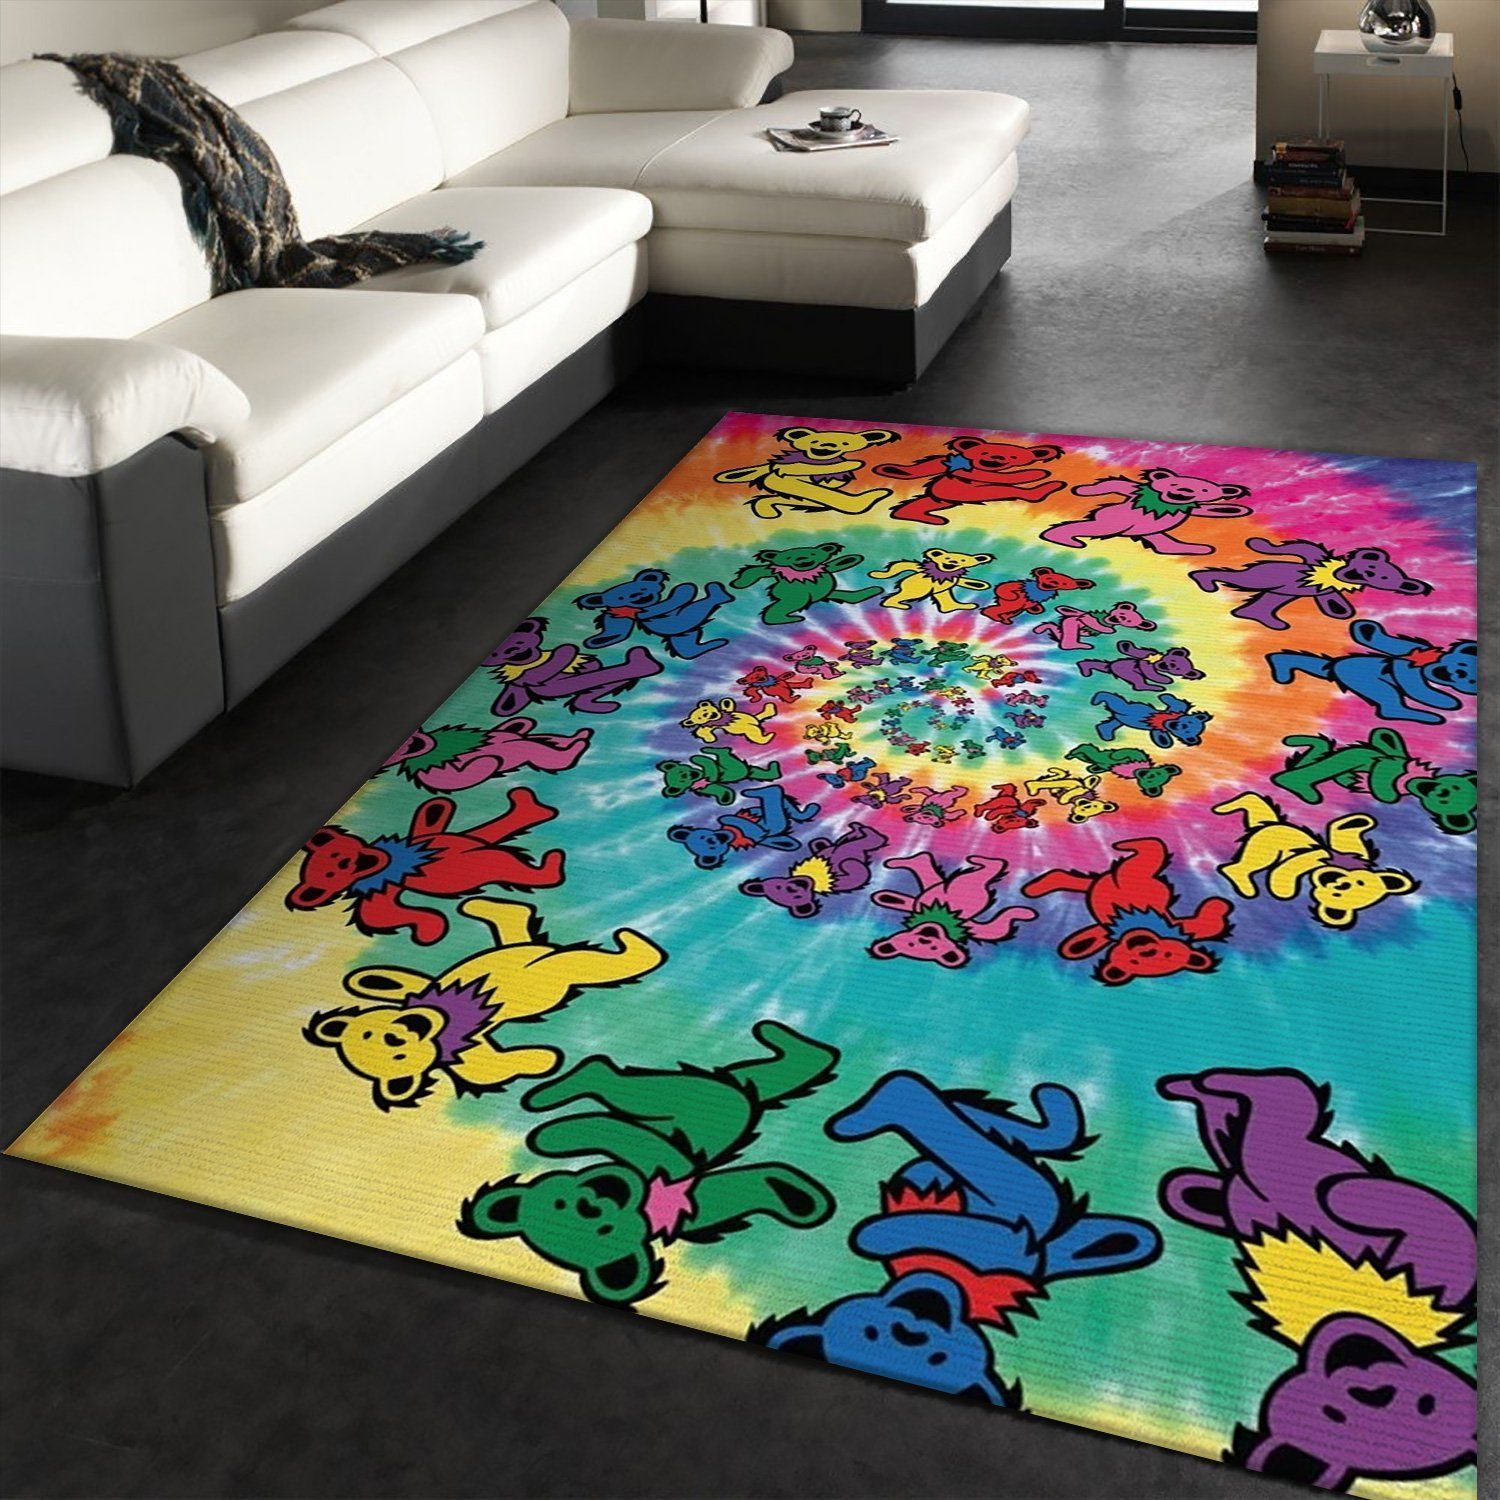 Grateful Dead Tie Dye Dancing Bears Area Rug Rugs For Living Room Rug Home Decor – Indoor Outdoor Rugs